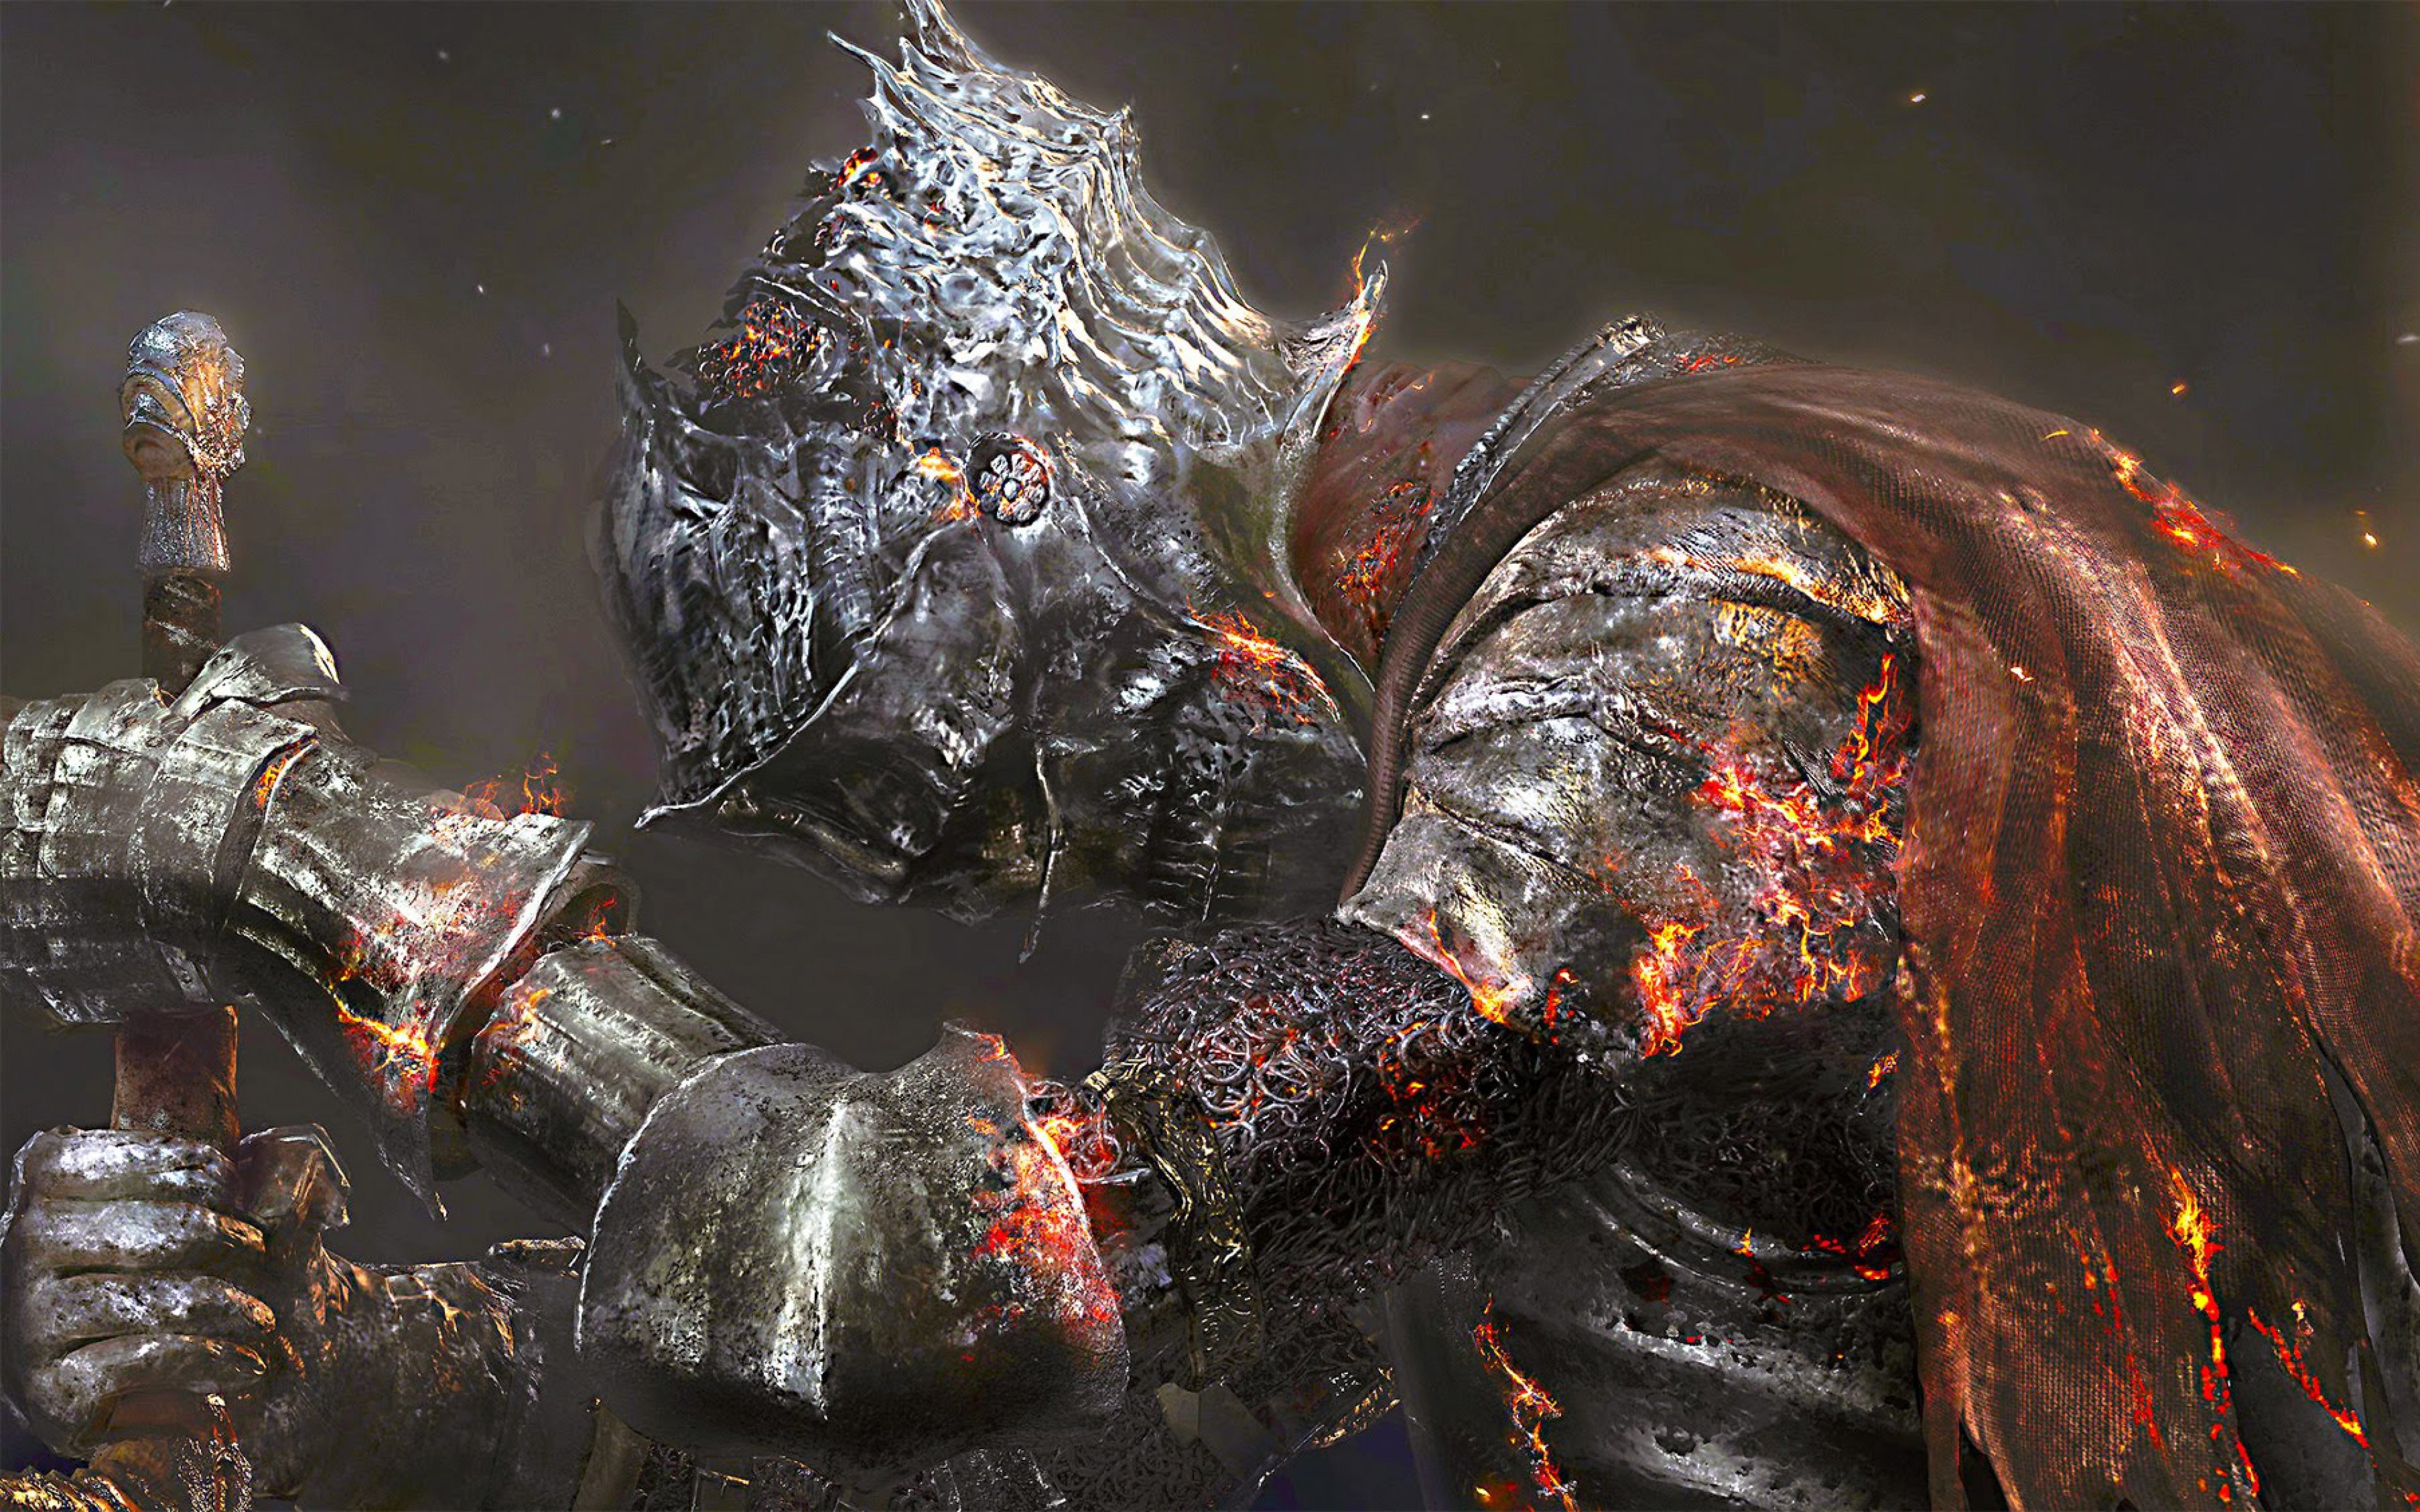 Dark Souls 3 Game Warrior 4K Wallpaper download in high quality 3840x2400